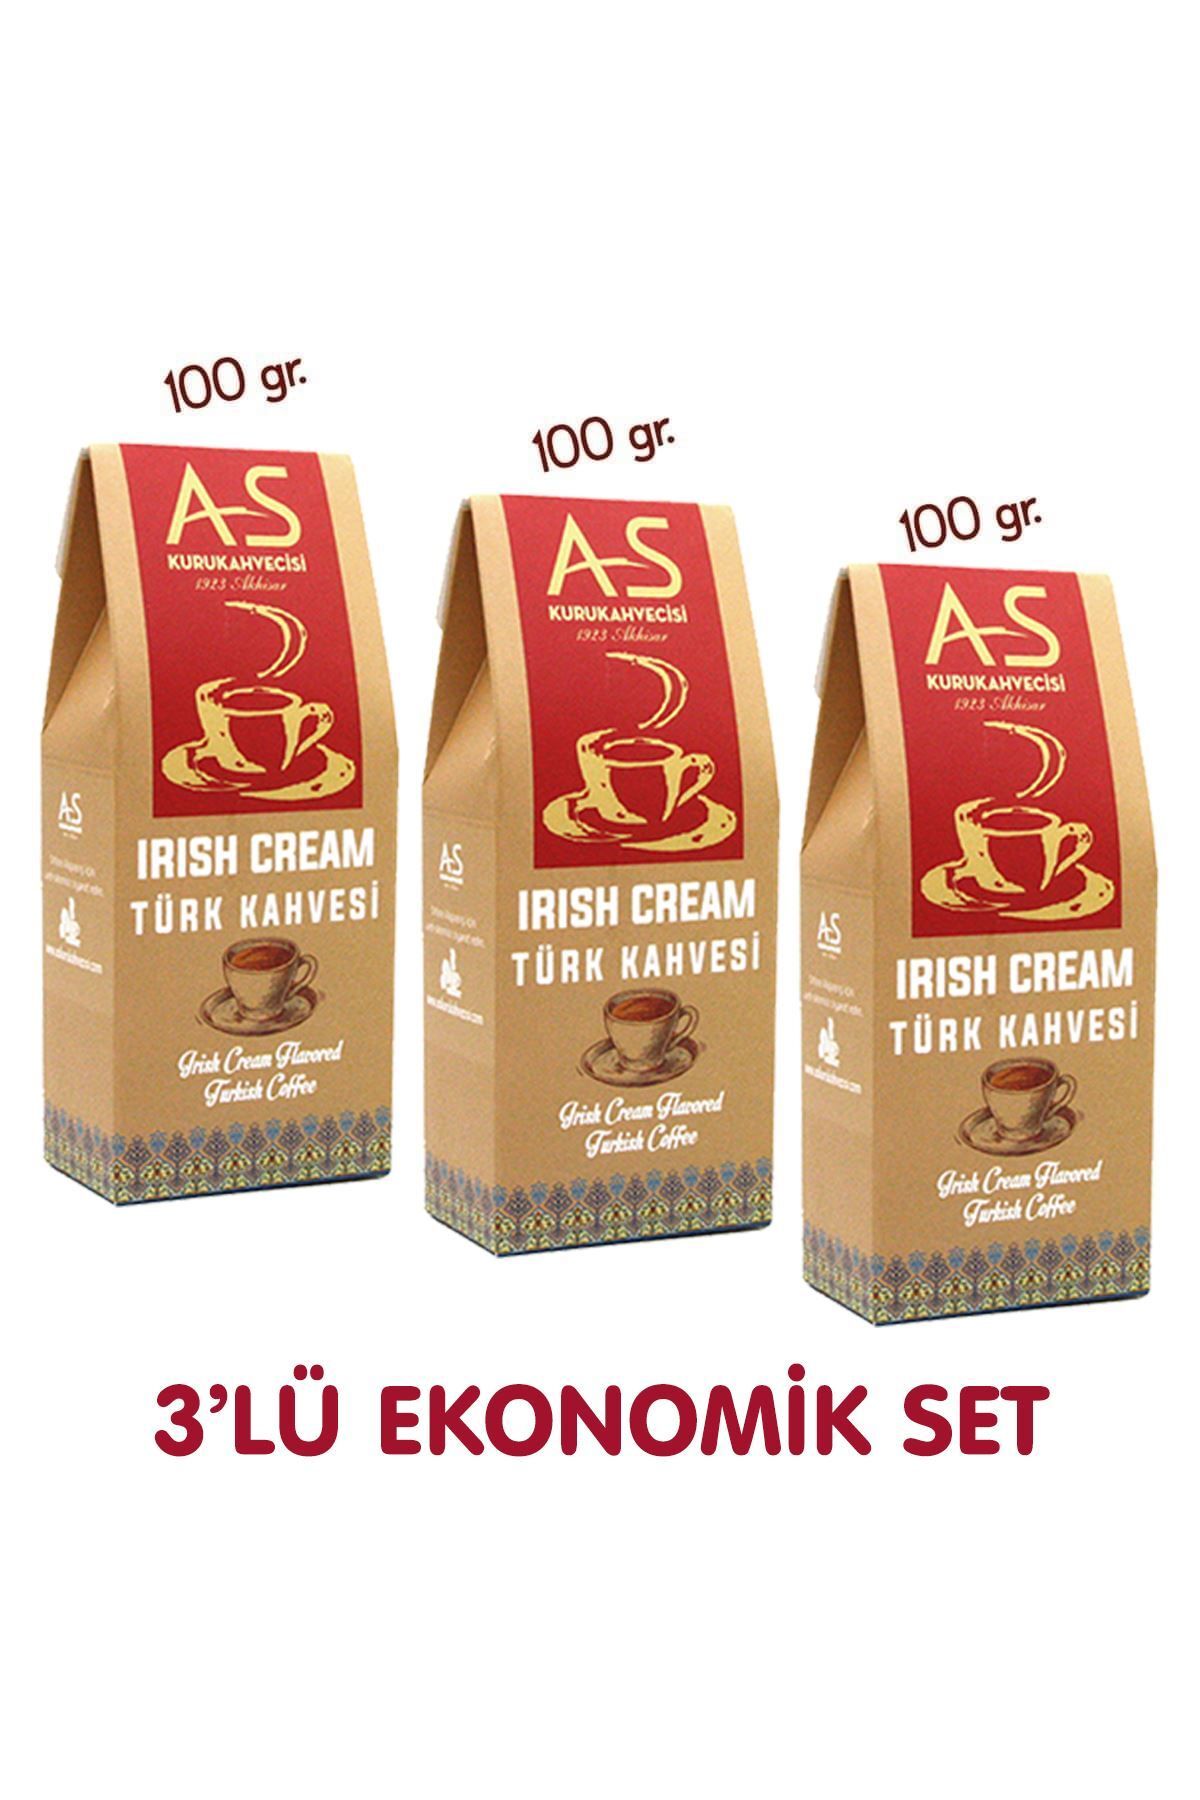 AS Kurukahvecisi 3'lü Irish Cream Türk Kahvesi Ekonomik Set